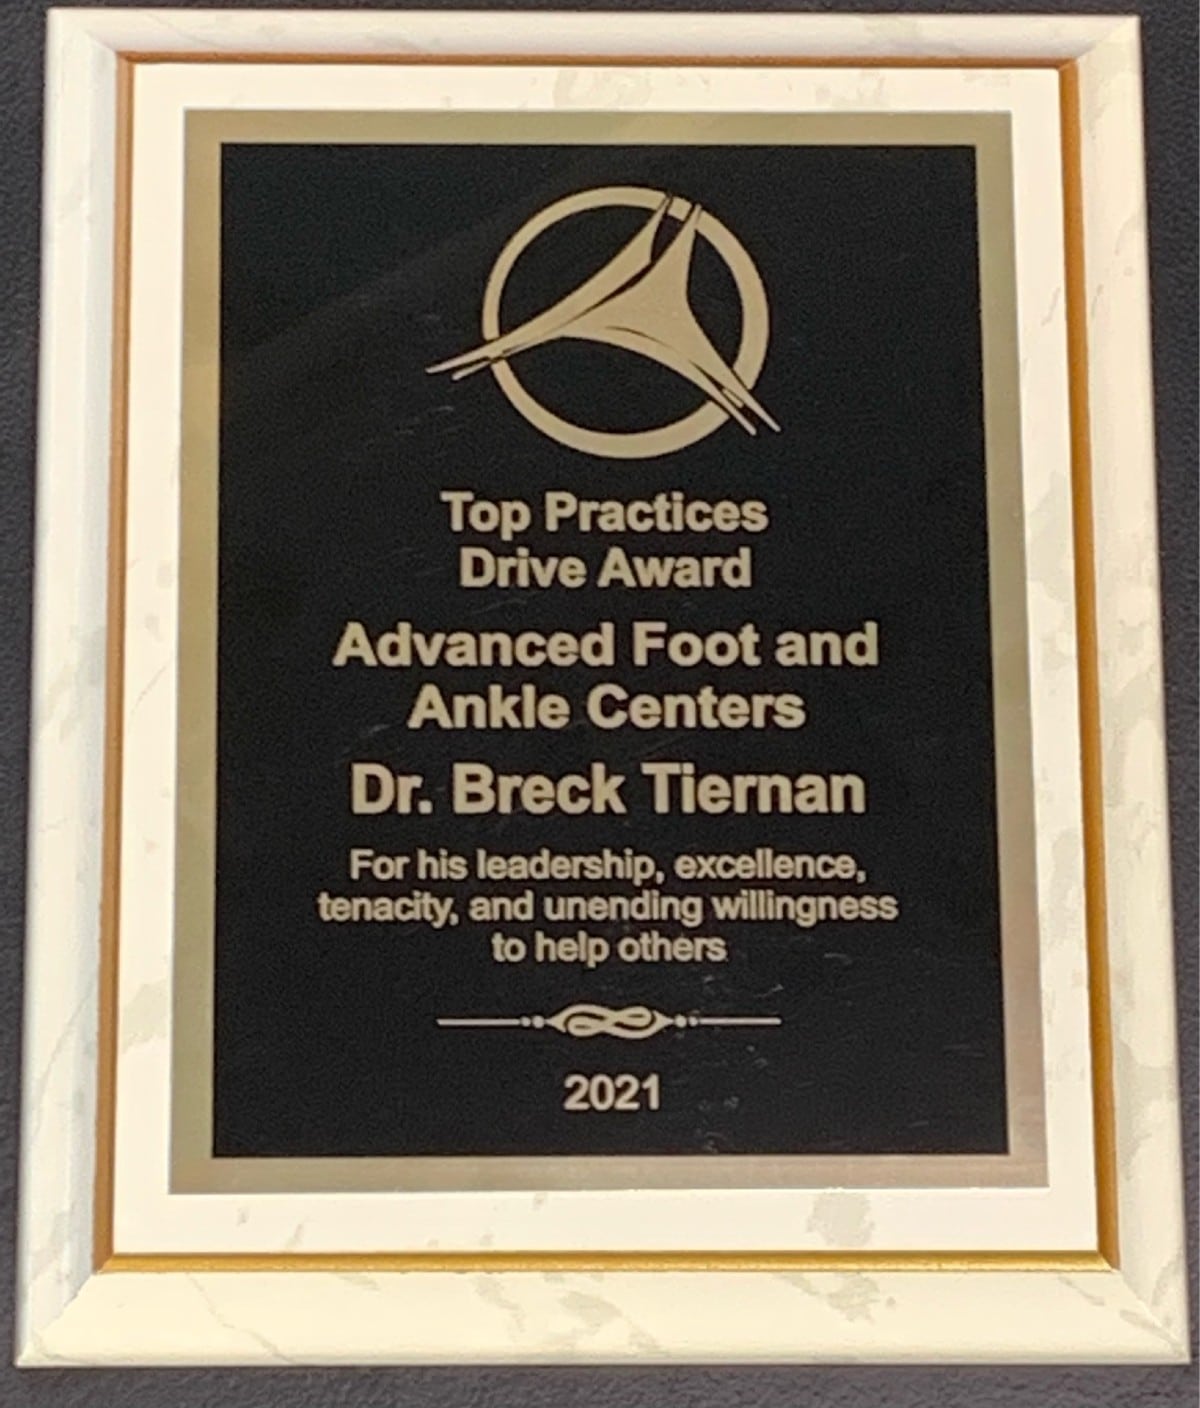 2021 Top Practices Drive Award